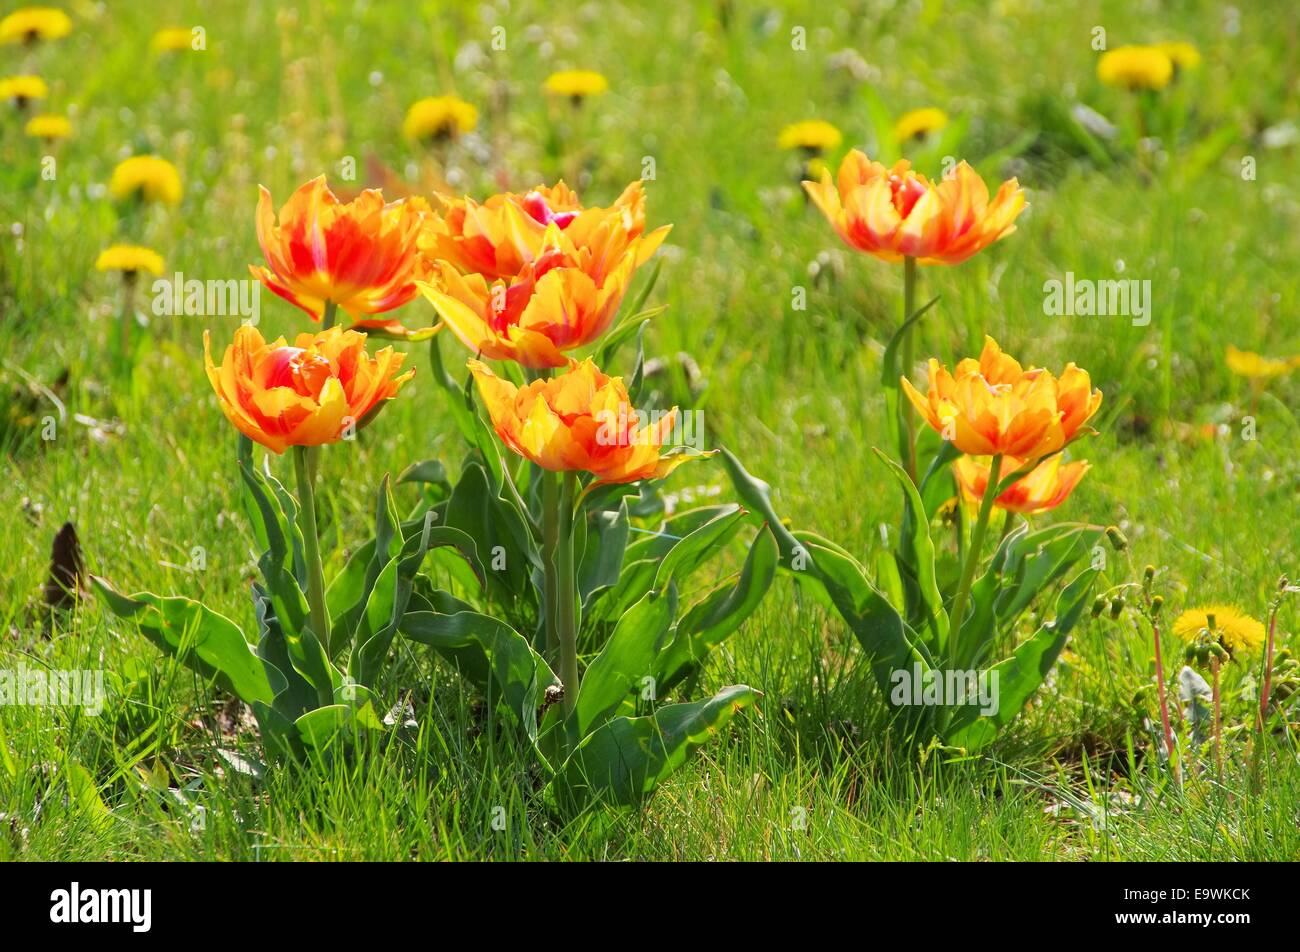 Tulpe rot gelb - tulip red yellow 05 Stock Photo